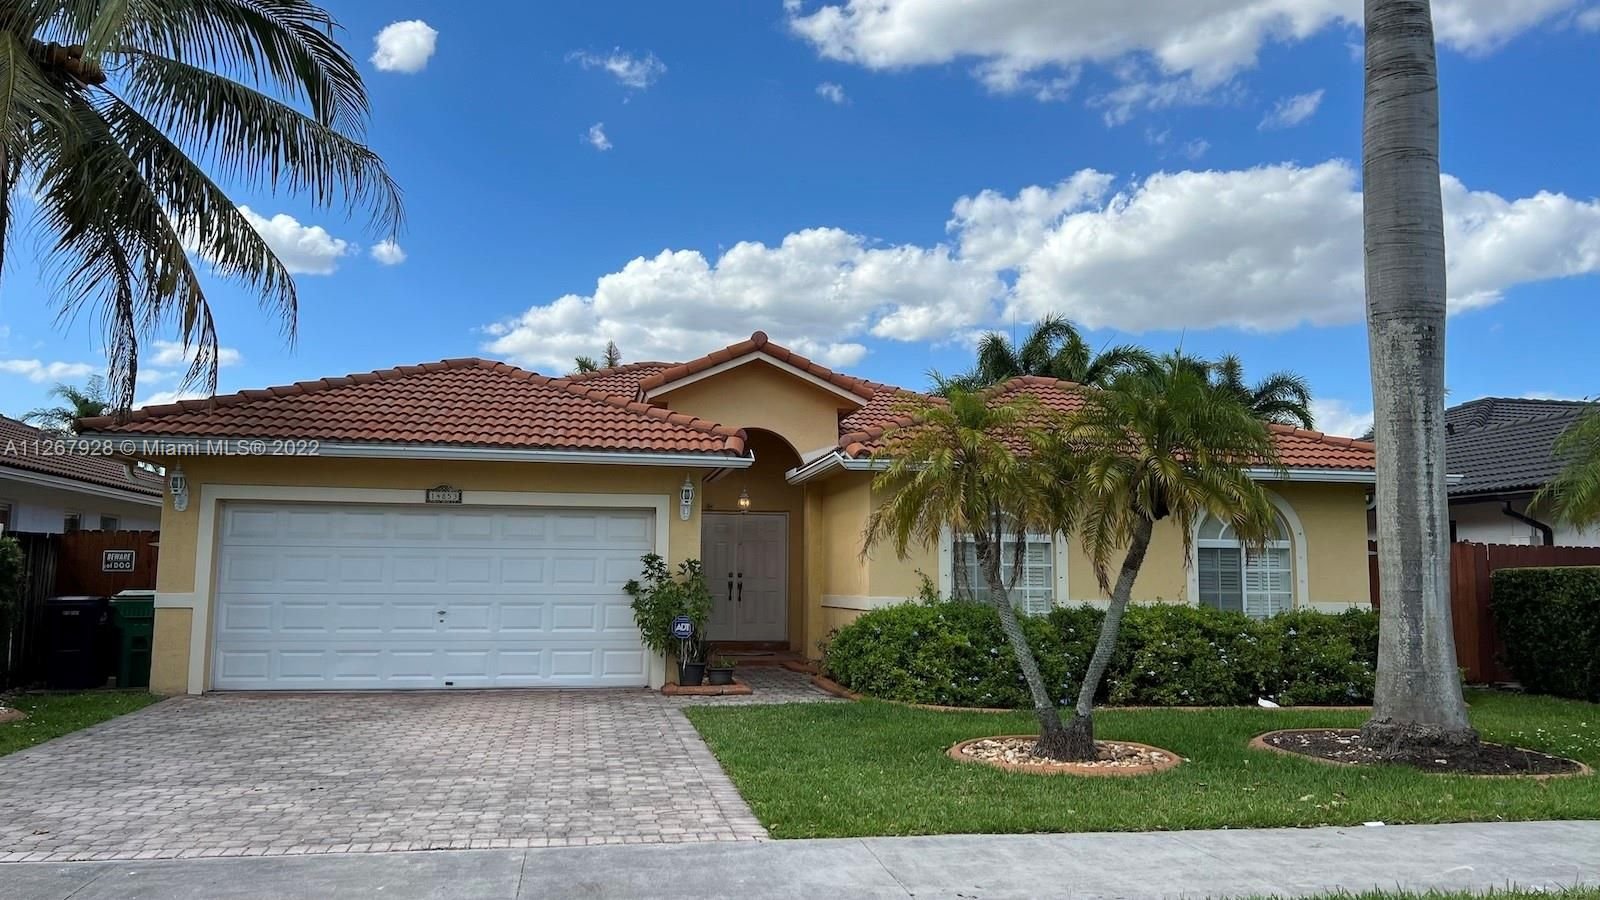 Real estate property located at 14853 178th Ter, Miami-Dade County, Miami, FL